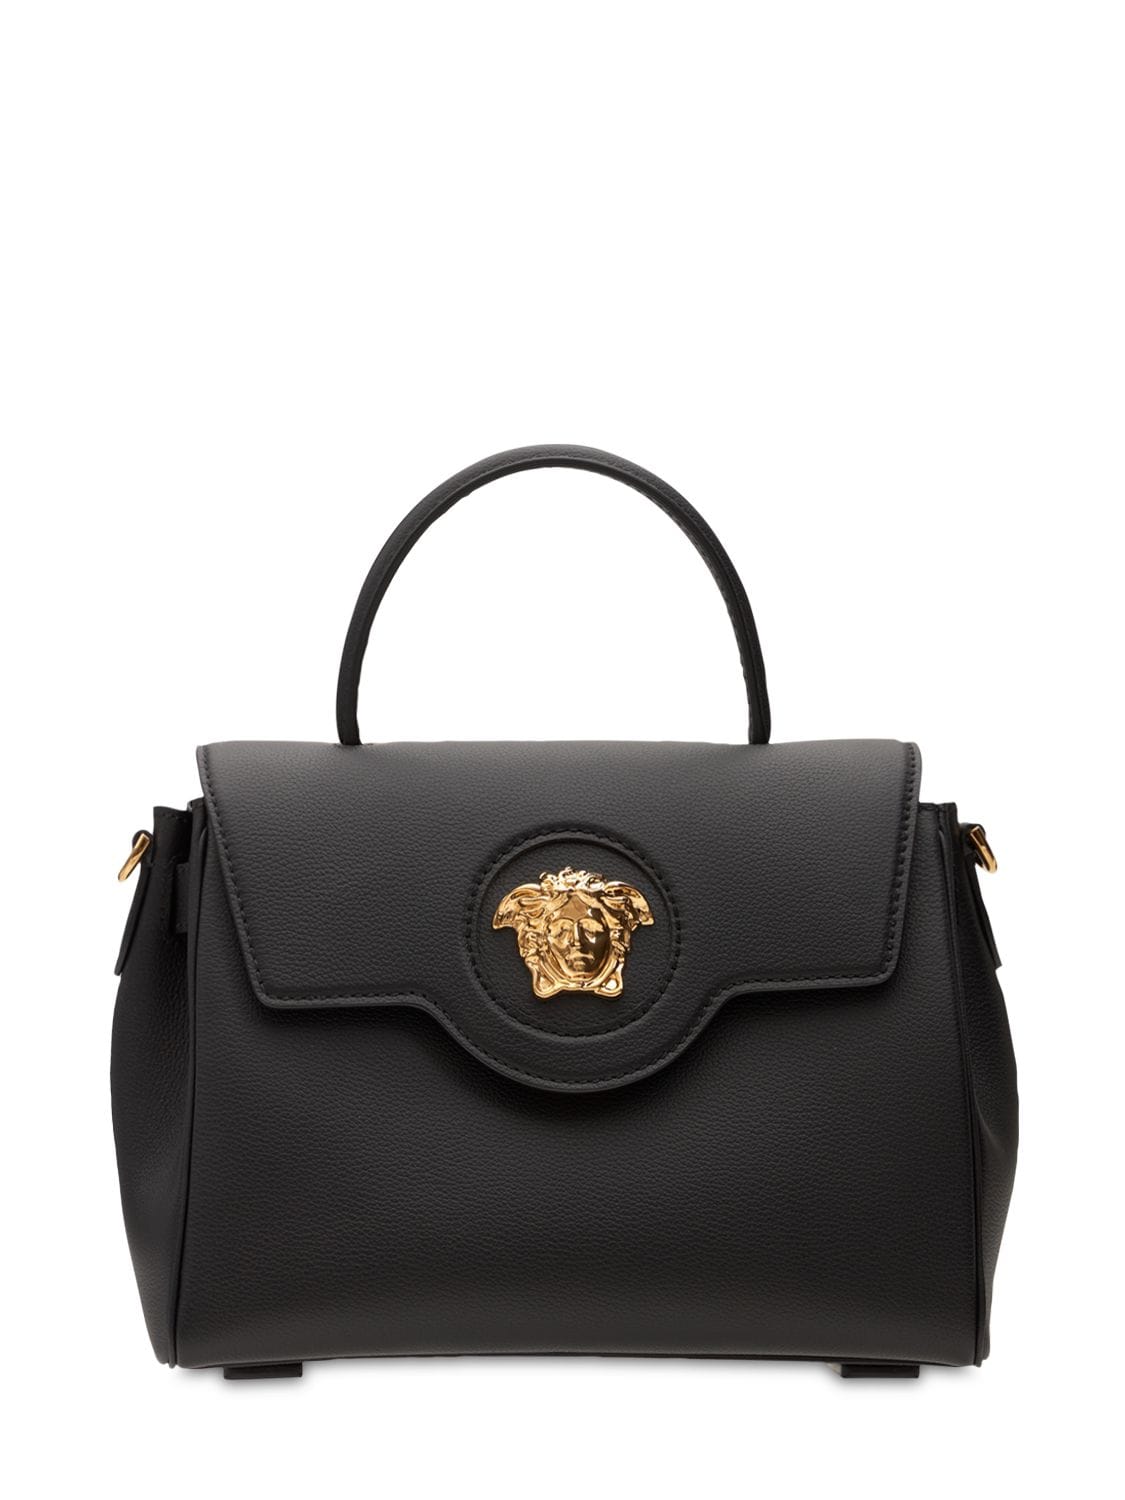 Versace Medusa Leather Top Handle Bag In Black